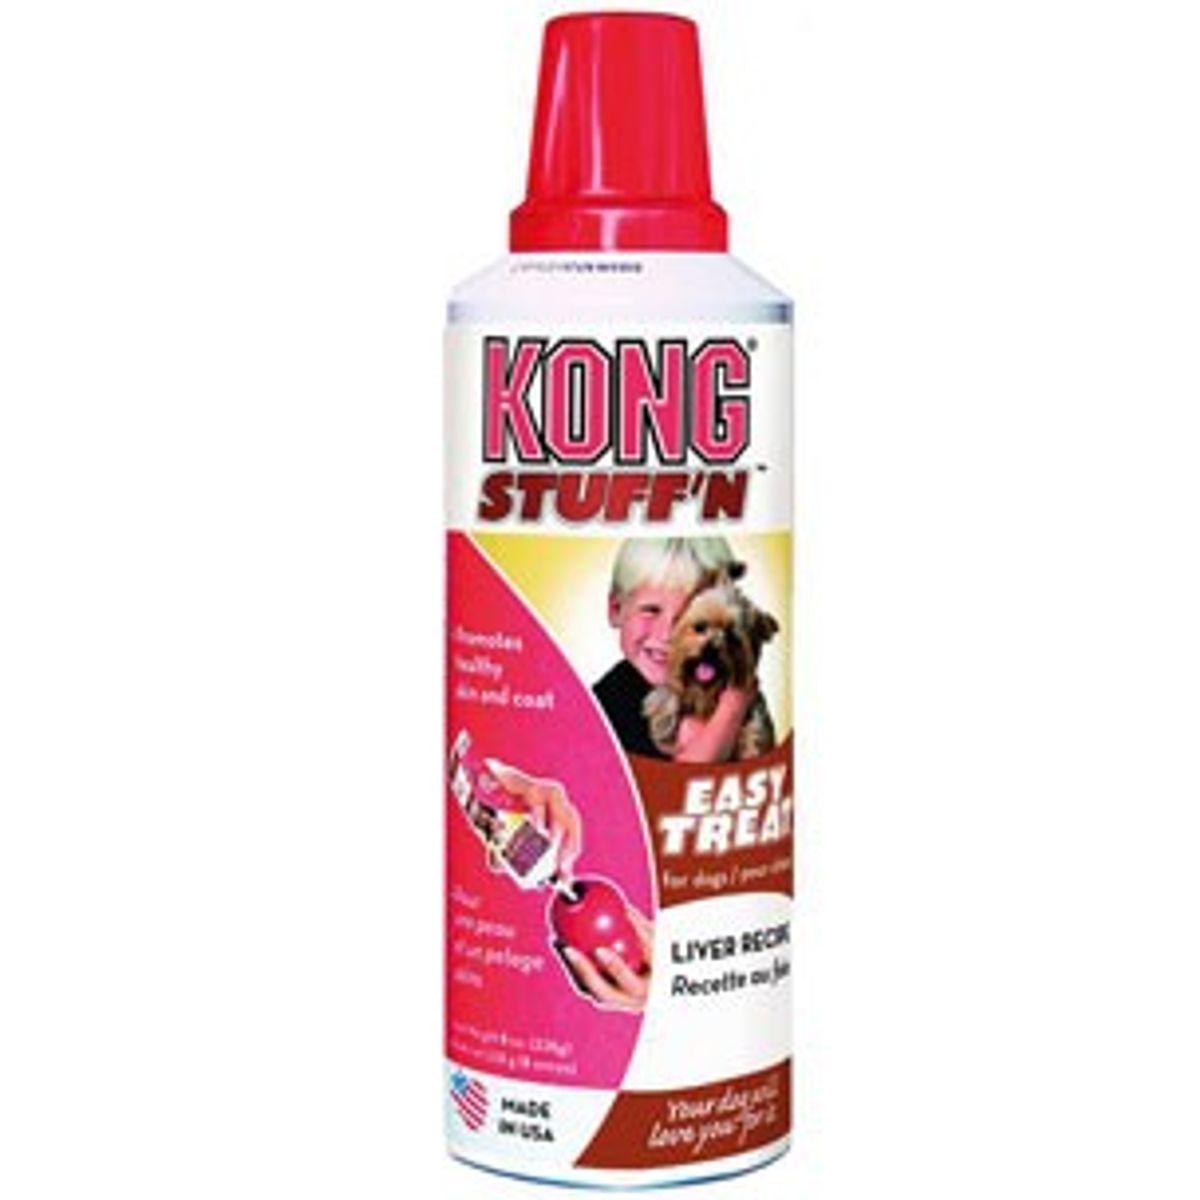 Kong Stuff'n Paste - Foie